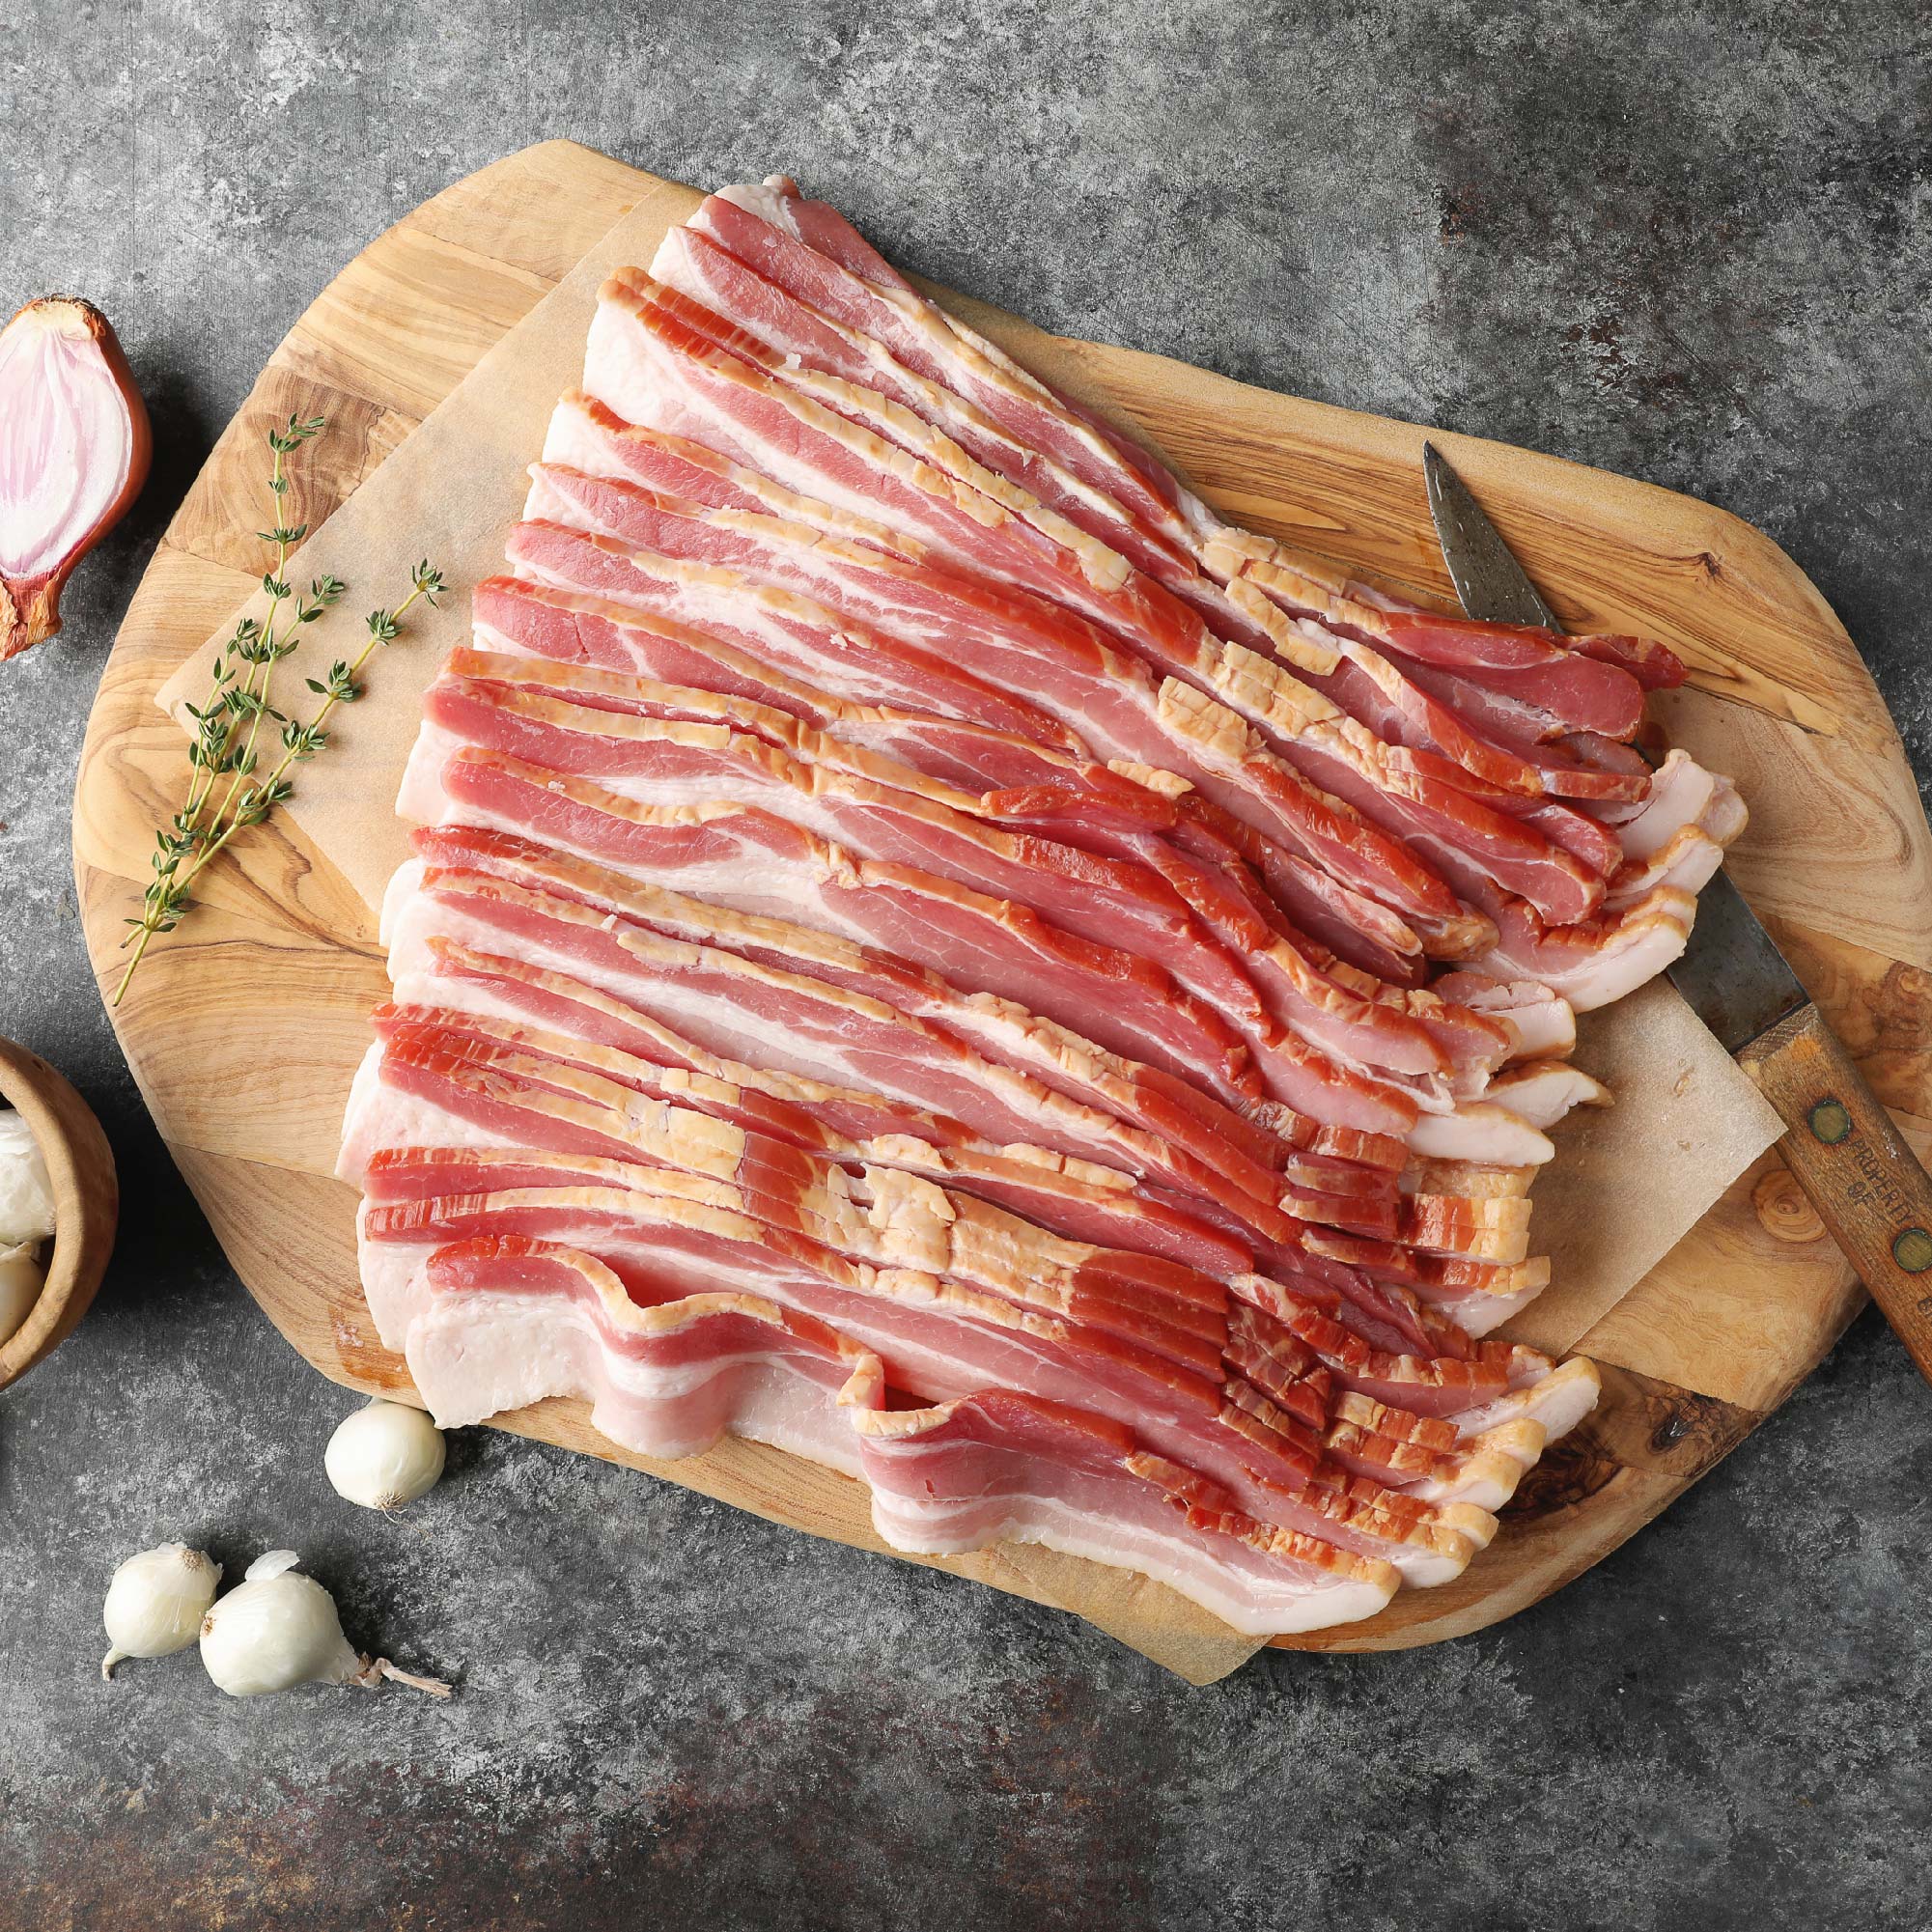 Applewood Smoked Bacon, Online Butcher Shop